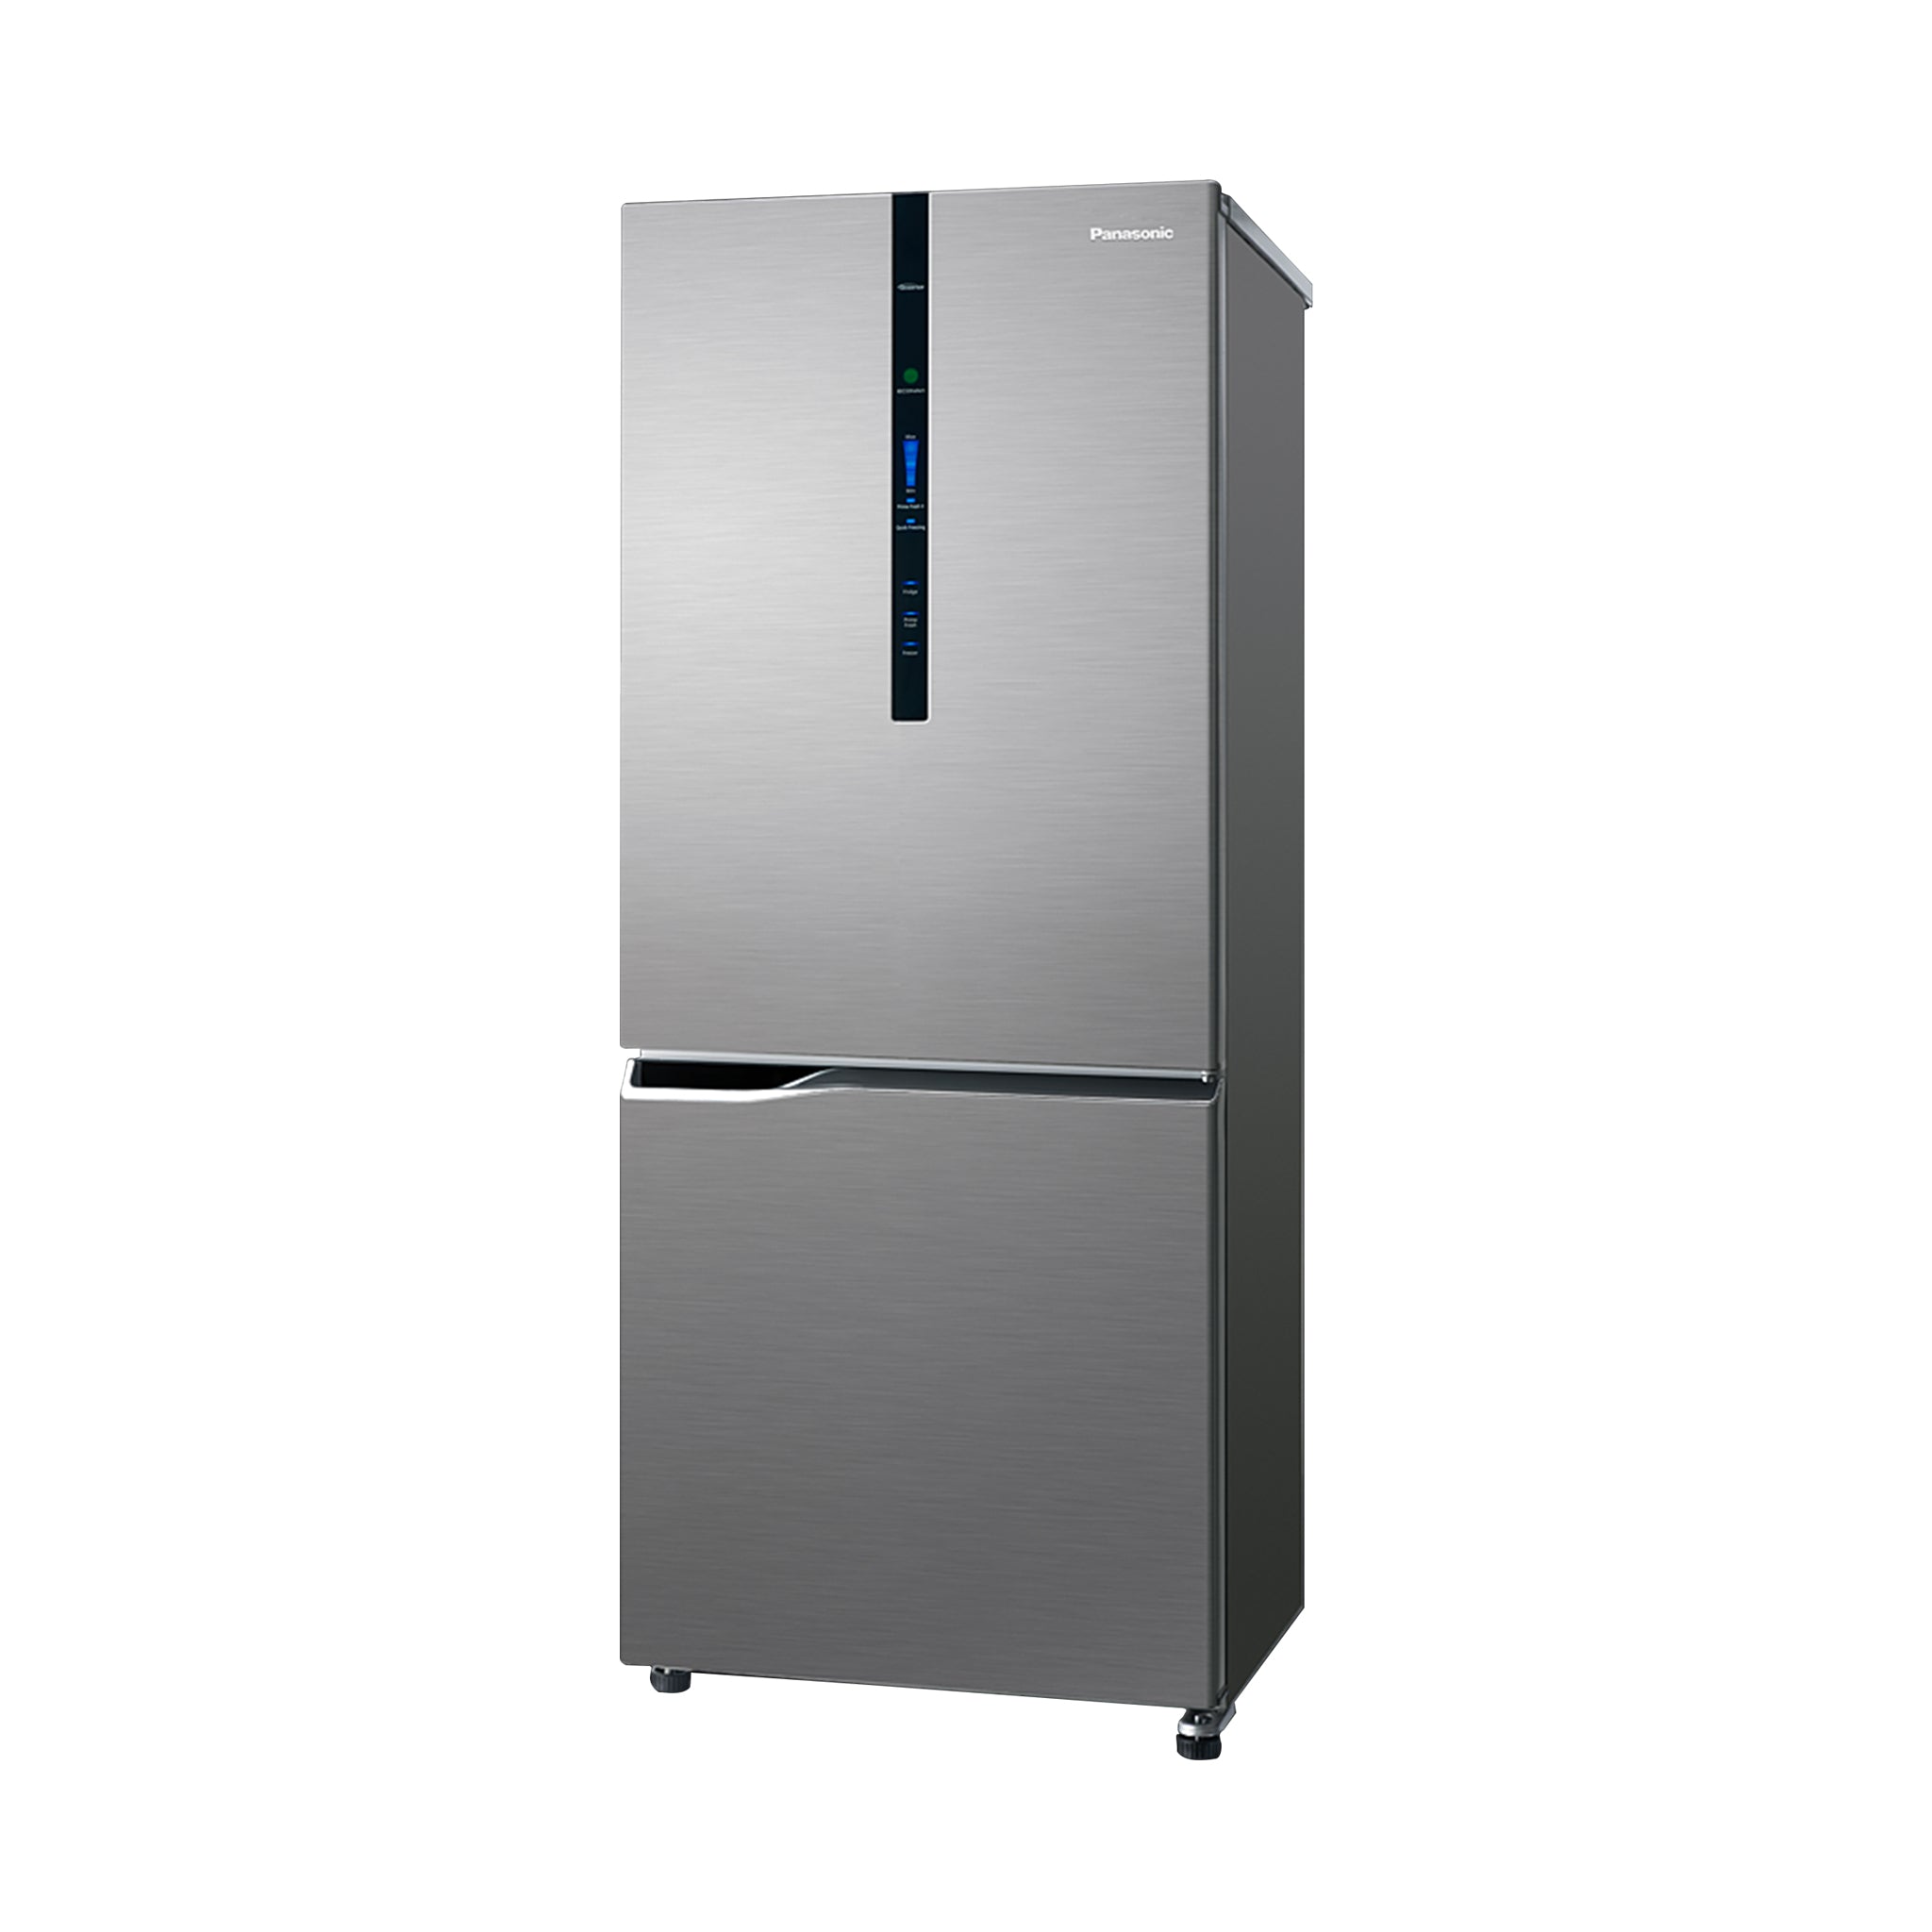 PANASONIC NR-BV280XSPH 2-Door Bottom Freezer Refrigerator Panasonic